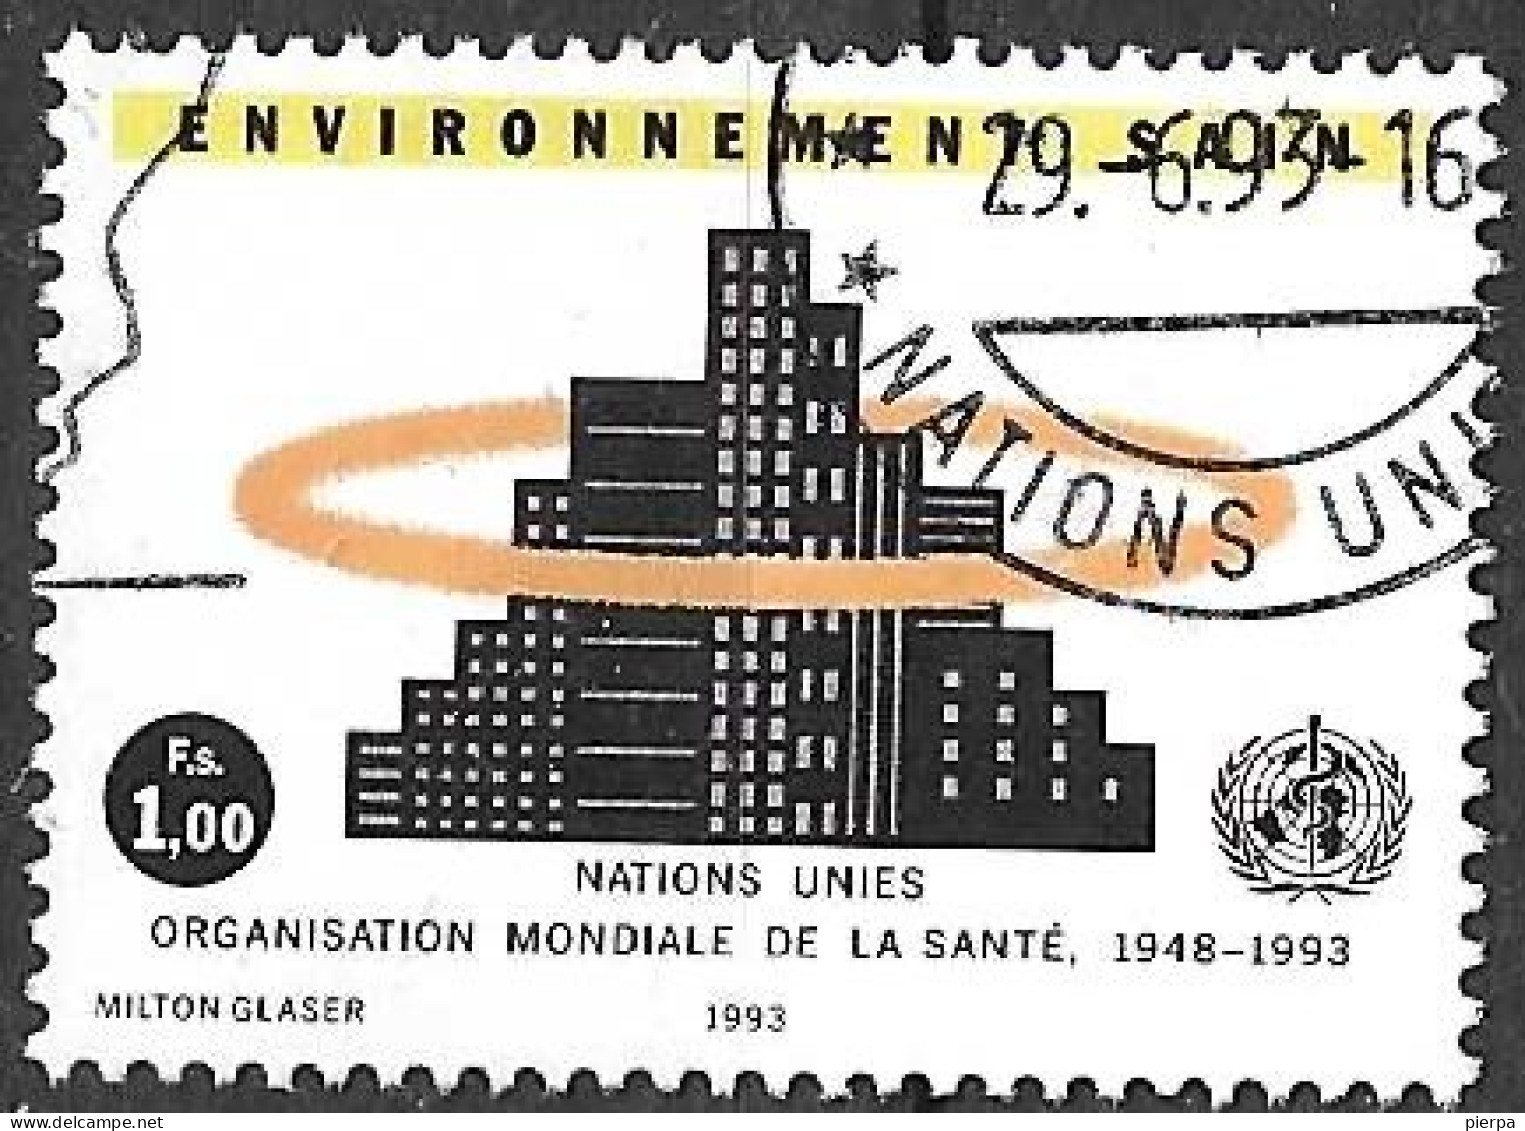 O.N.U. GENEVE - 1993 - PRO AMBIENTE - FR. 1,00 -  USATO (YVERT 234 - MICHEL 232) - Used Stamps